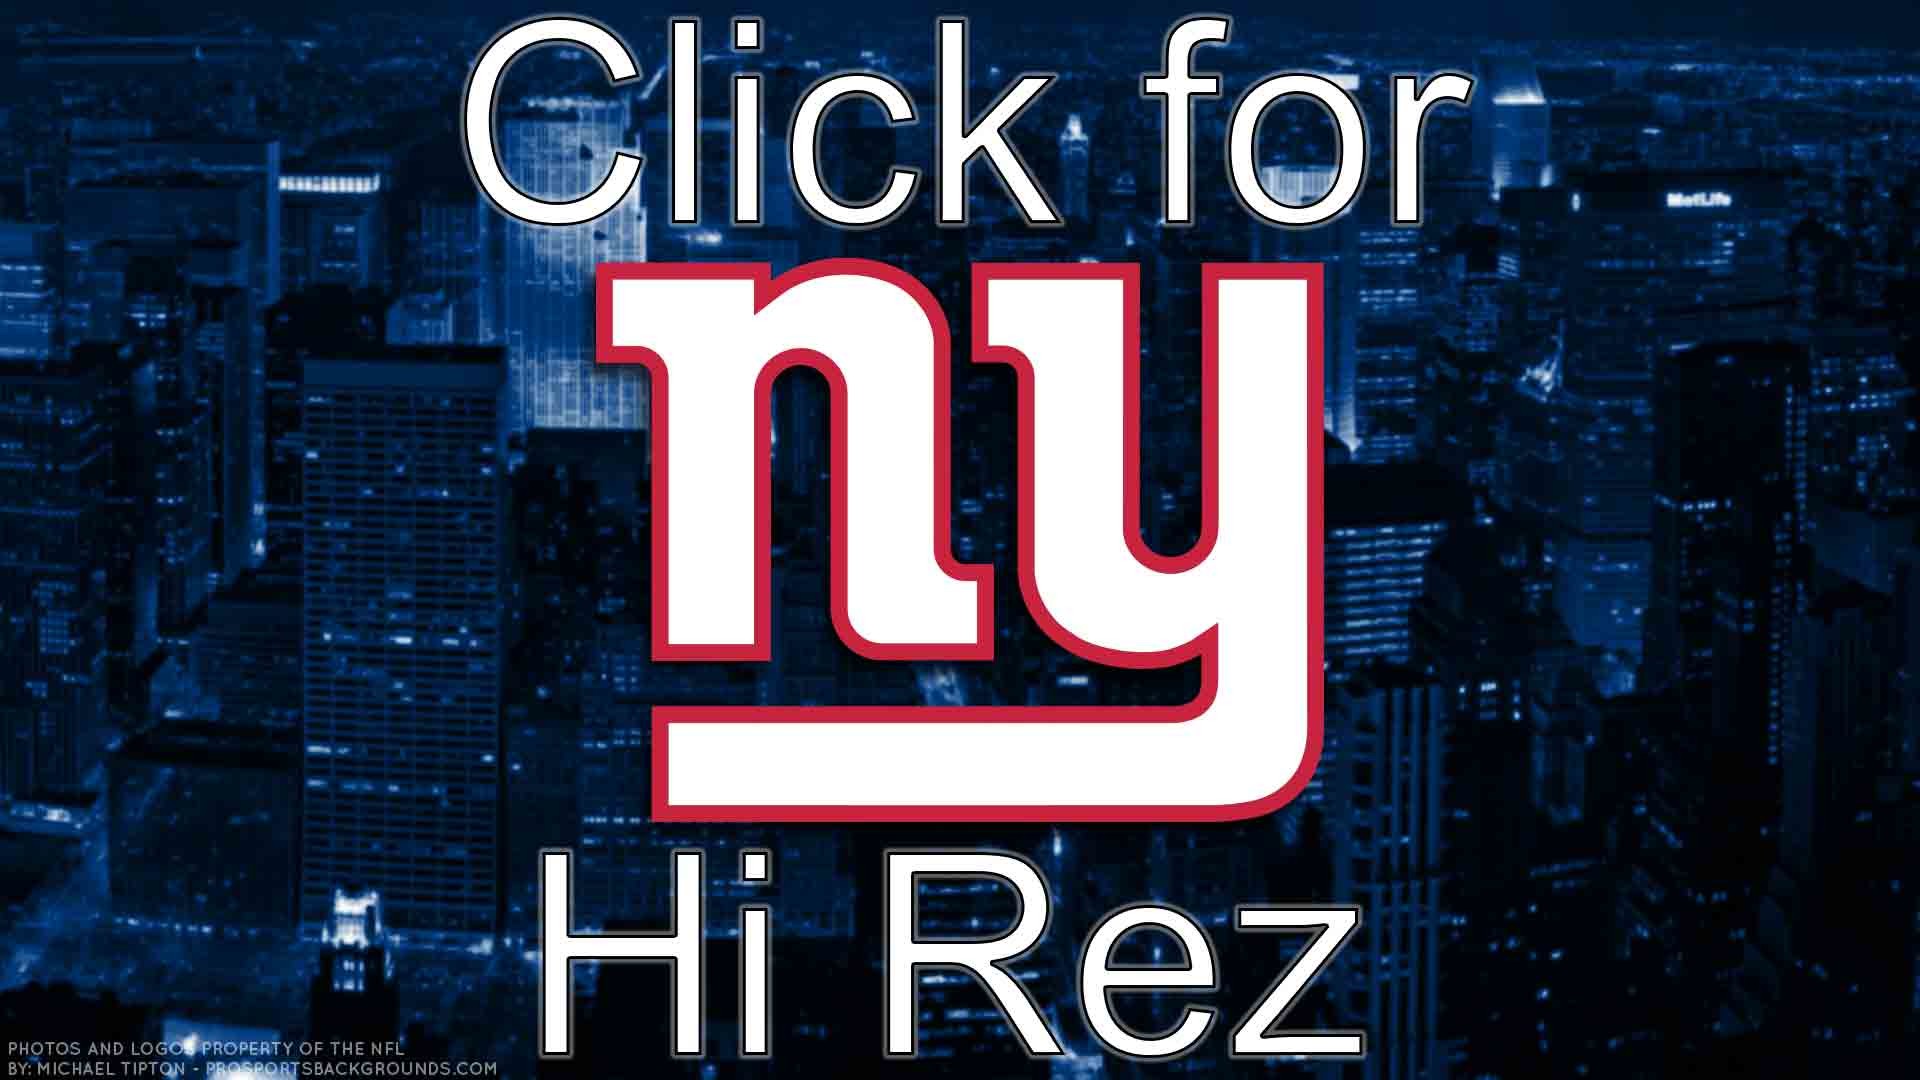 … New York Giants 2017 football logo wallpaper pc desktop computer